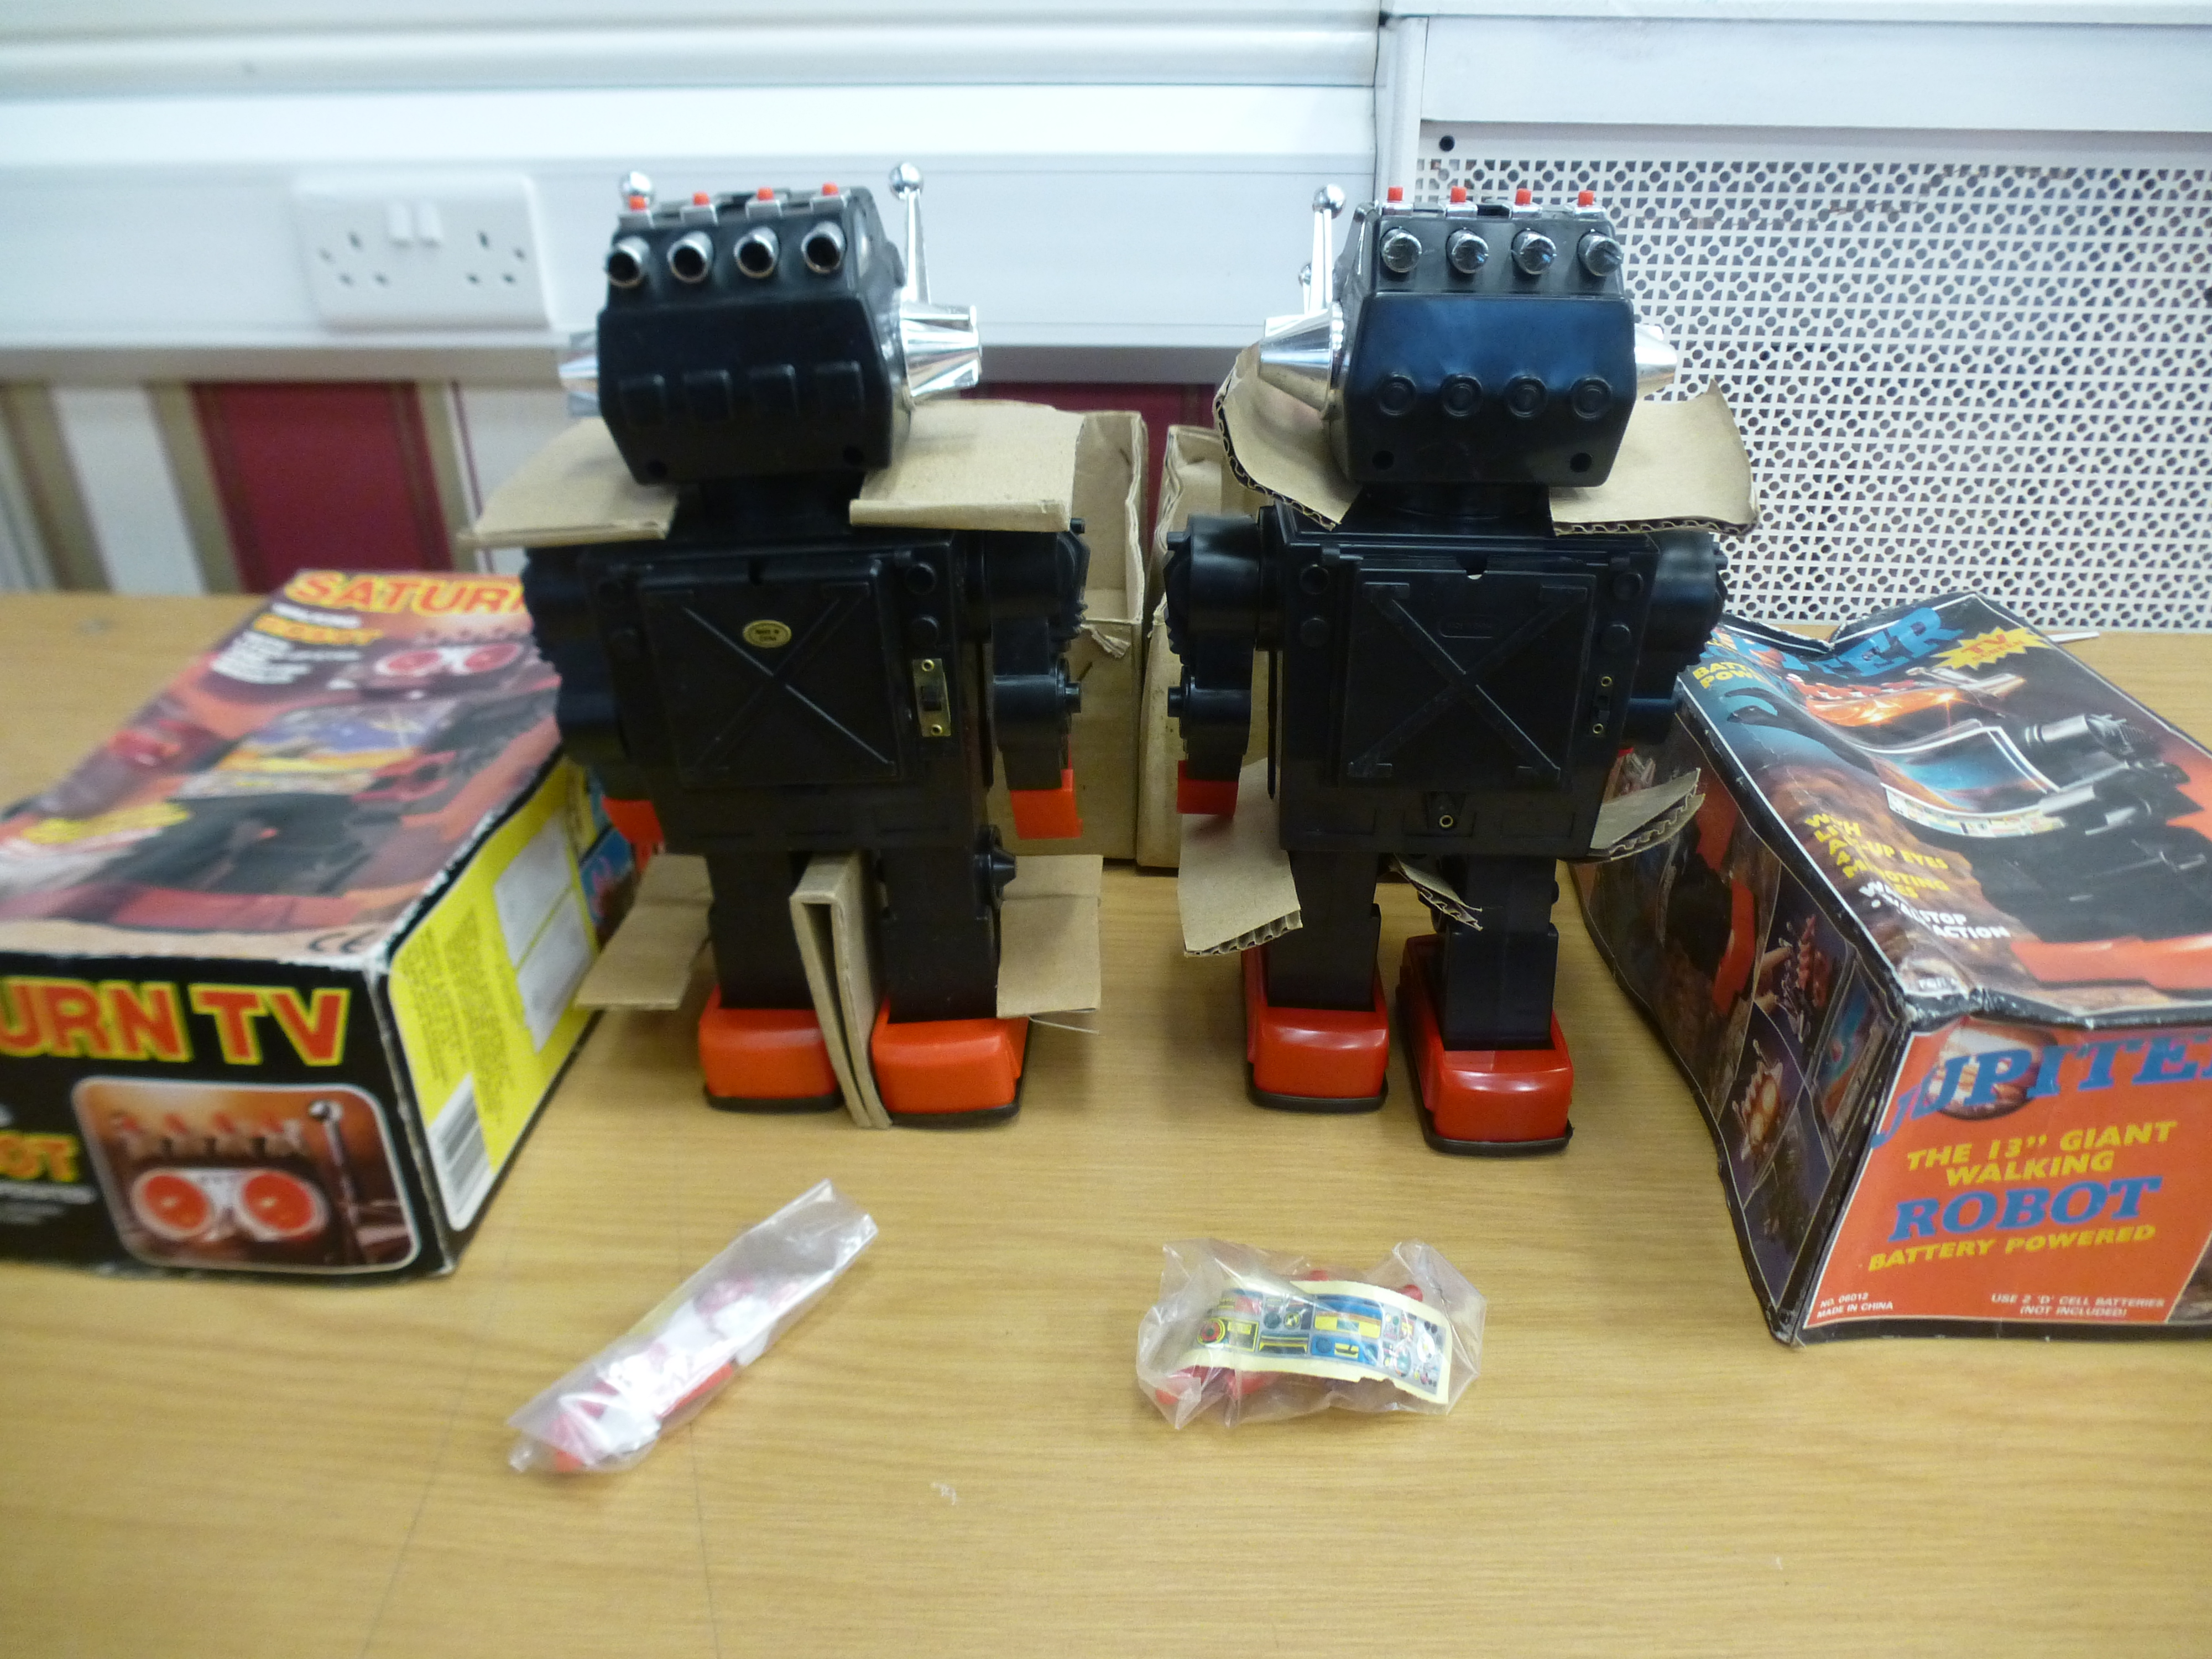 2 BOXED TV SCREEN ROBOTS - JUPITER AND SATURN - Image 6 of 6